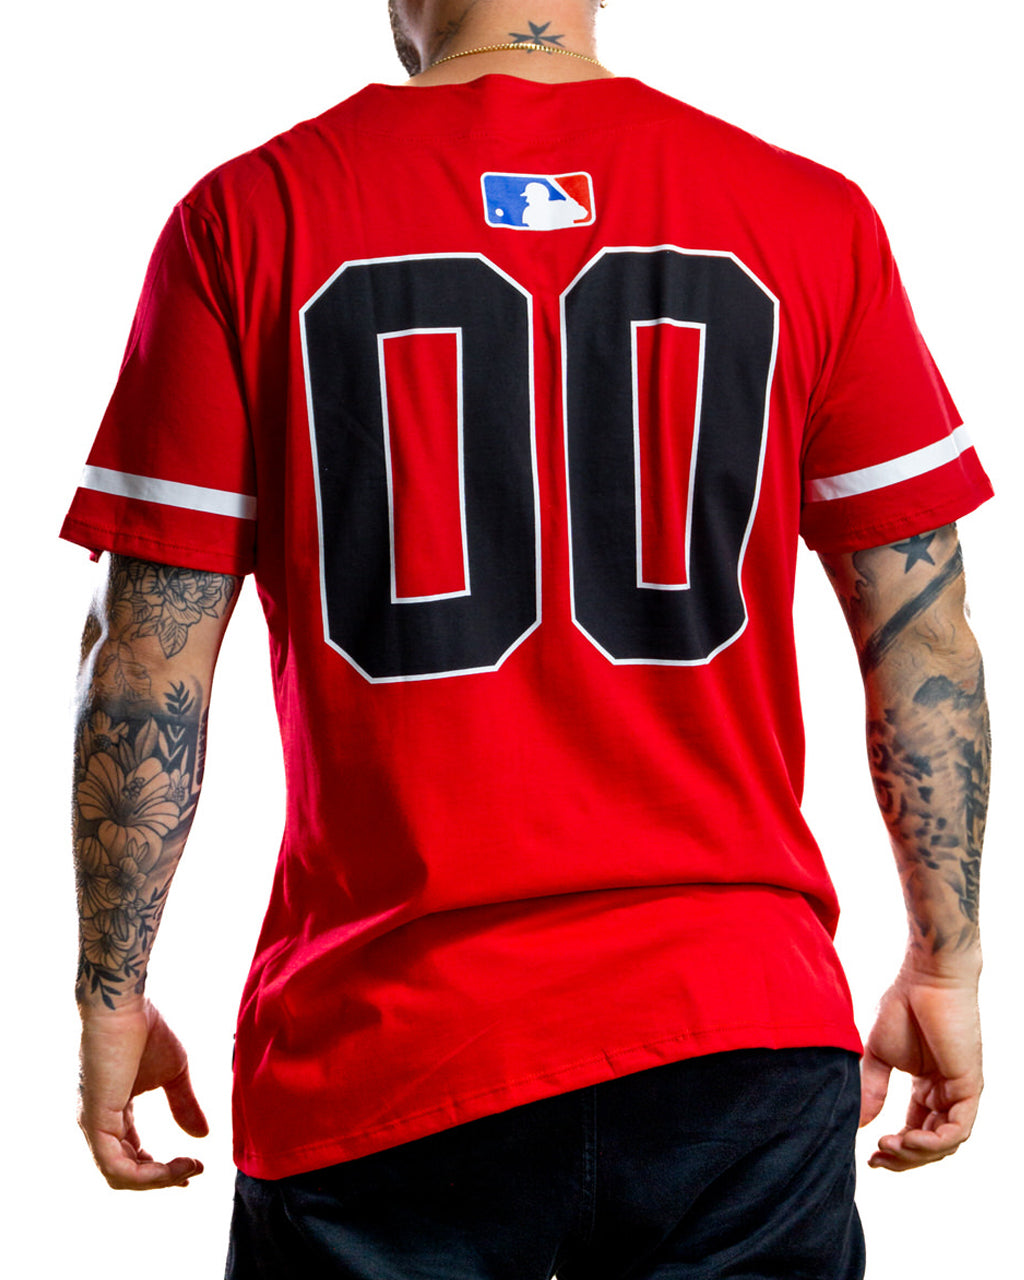 Beisbolera Roja RedSox - Stark Brand